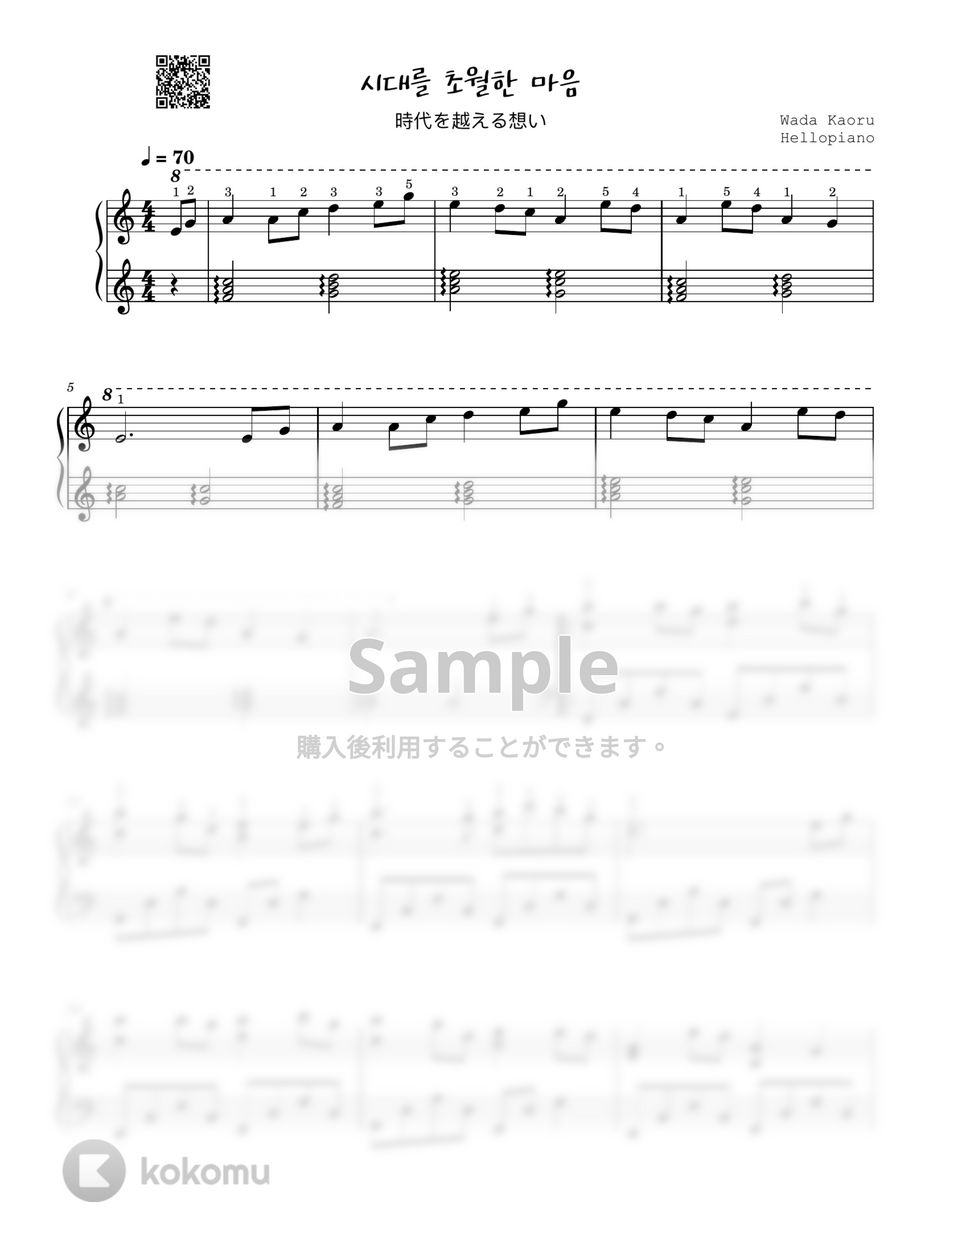 wada kaoru - 時代を越える想い (犬夜叉 OST) by Hellopiano